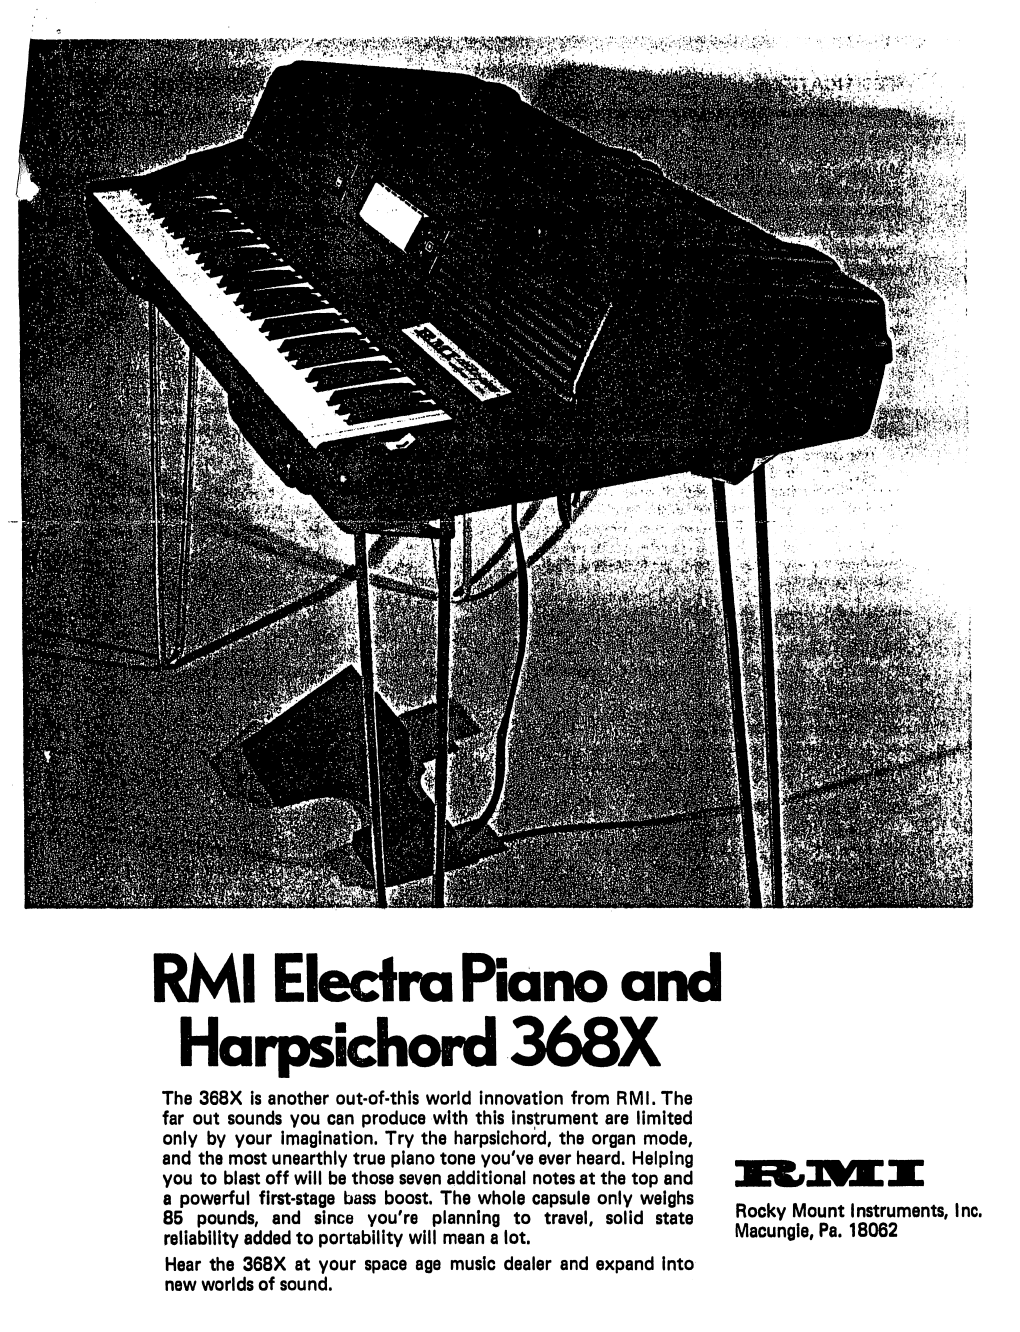 Harpsichord 368X